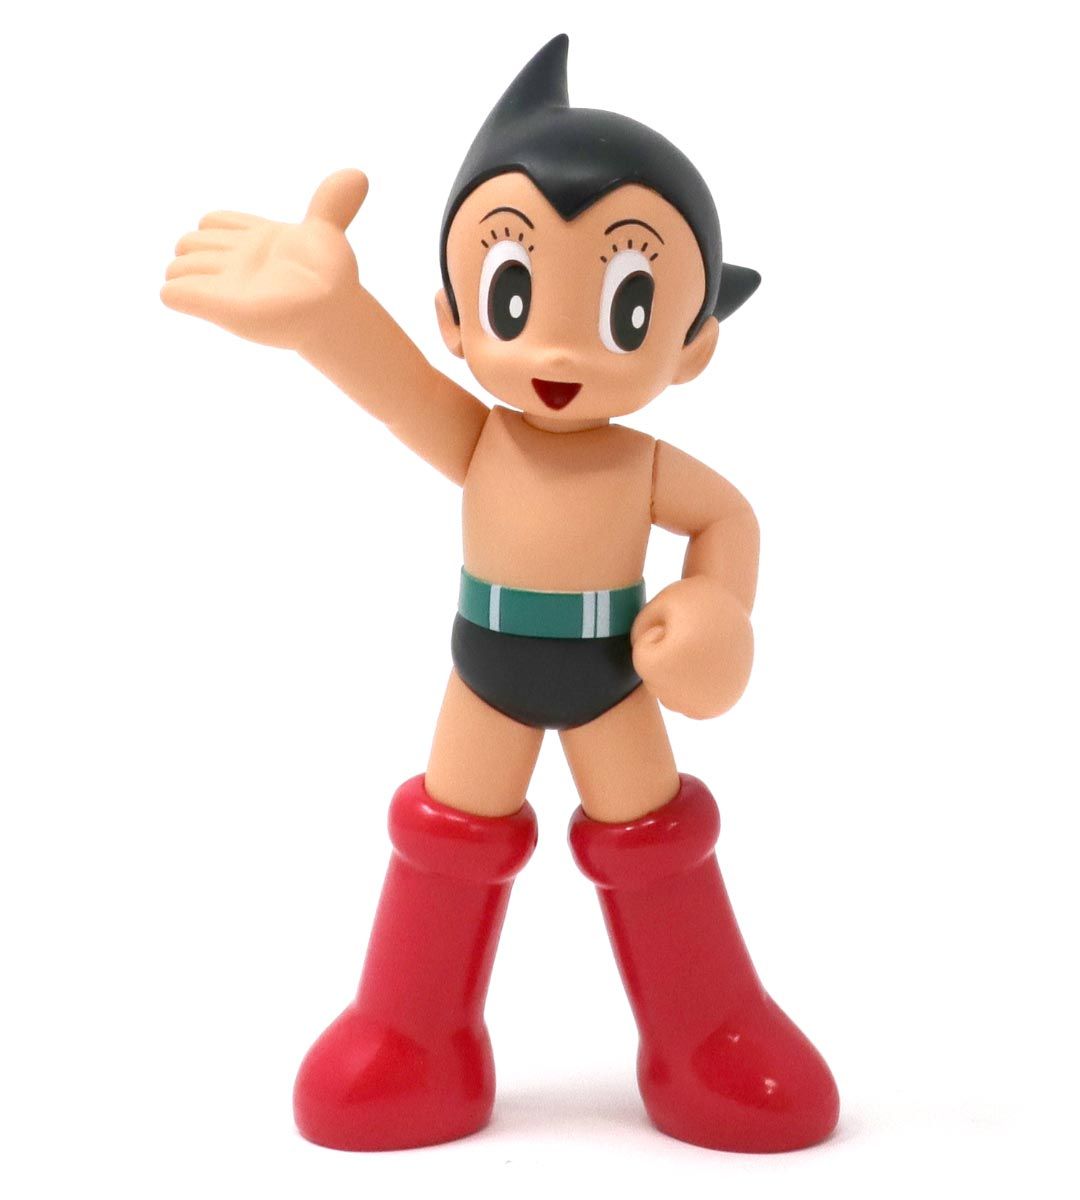 Astro Boy PVC icónico hacia.